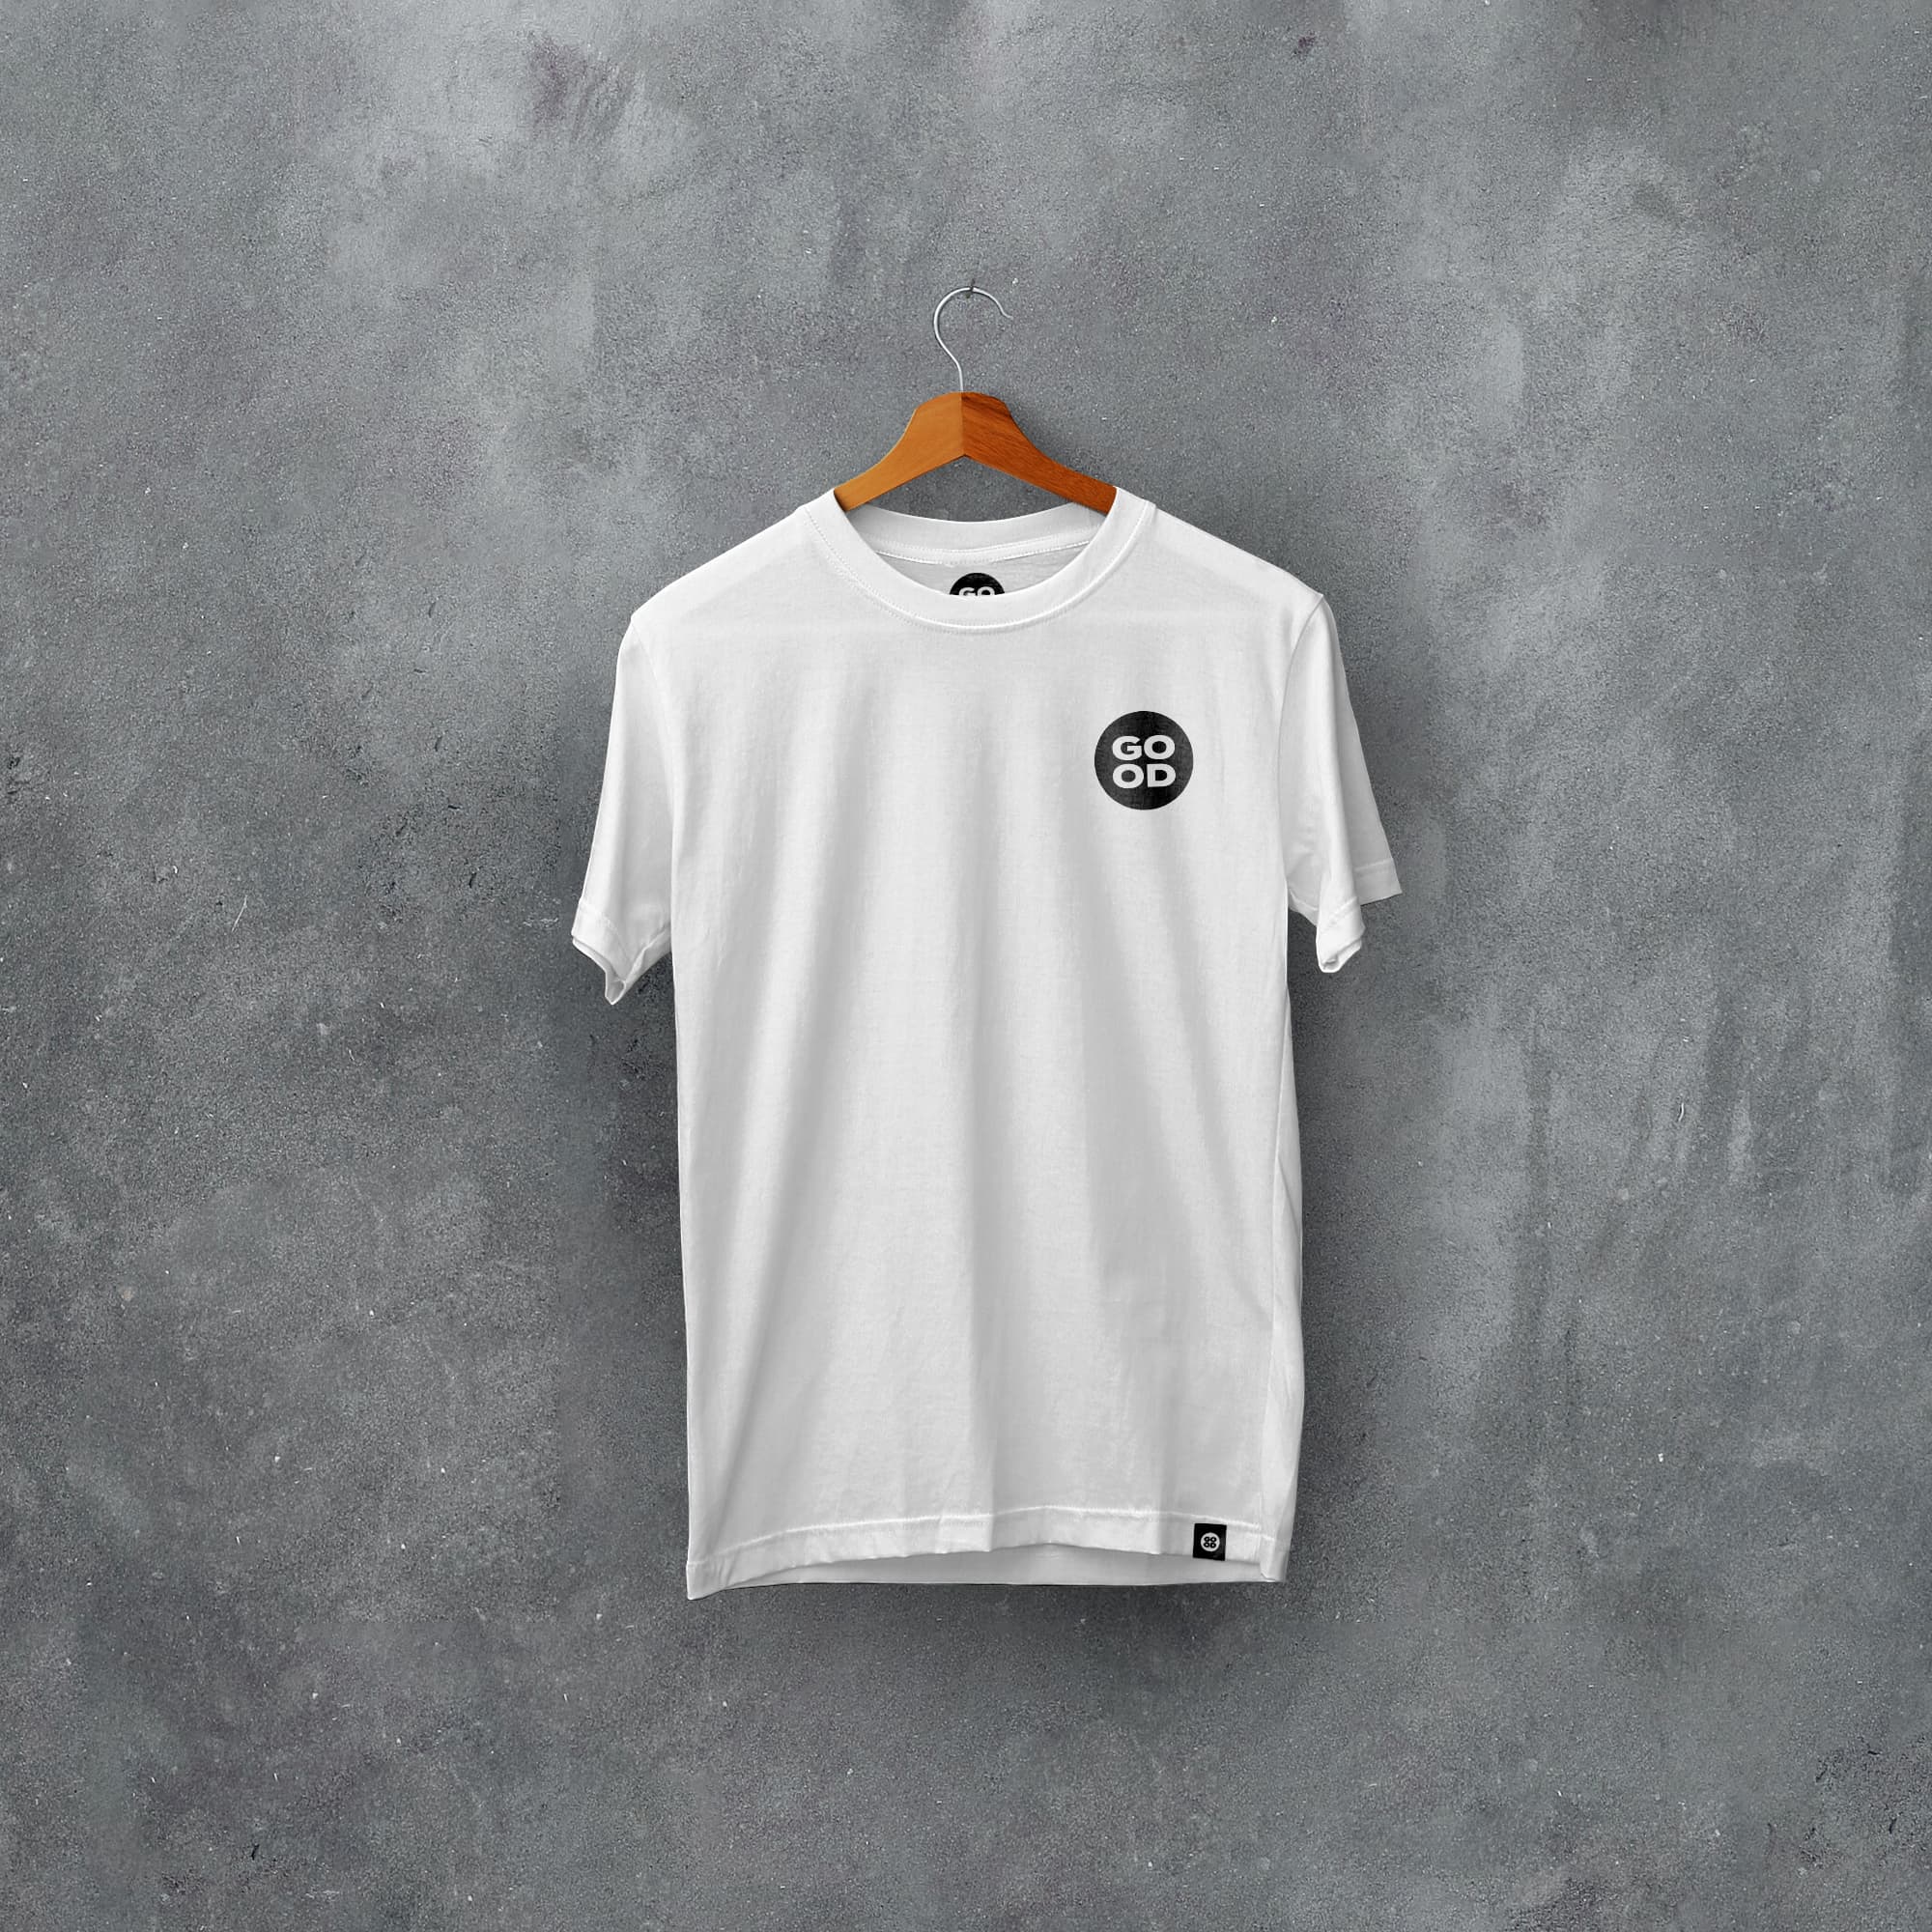 Bury Classic Kits Football T-Shirt